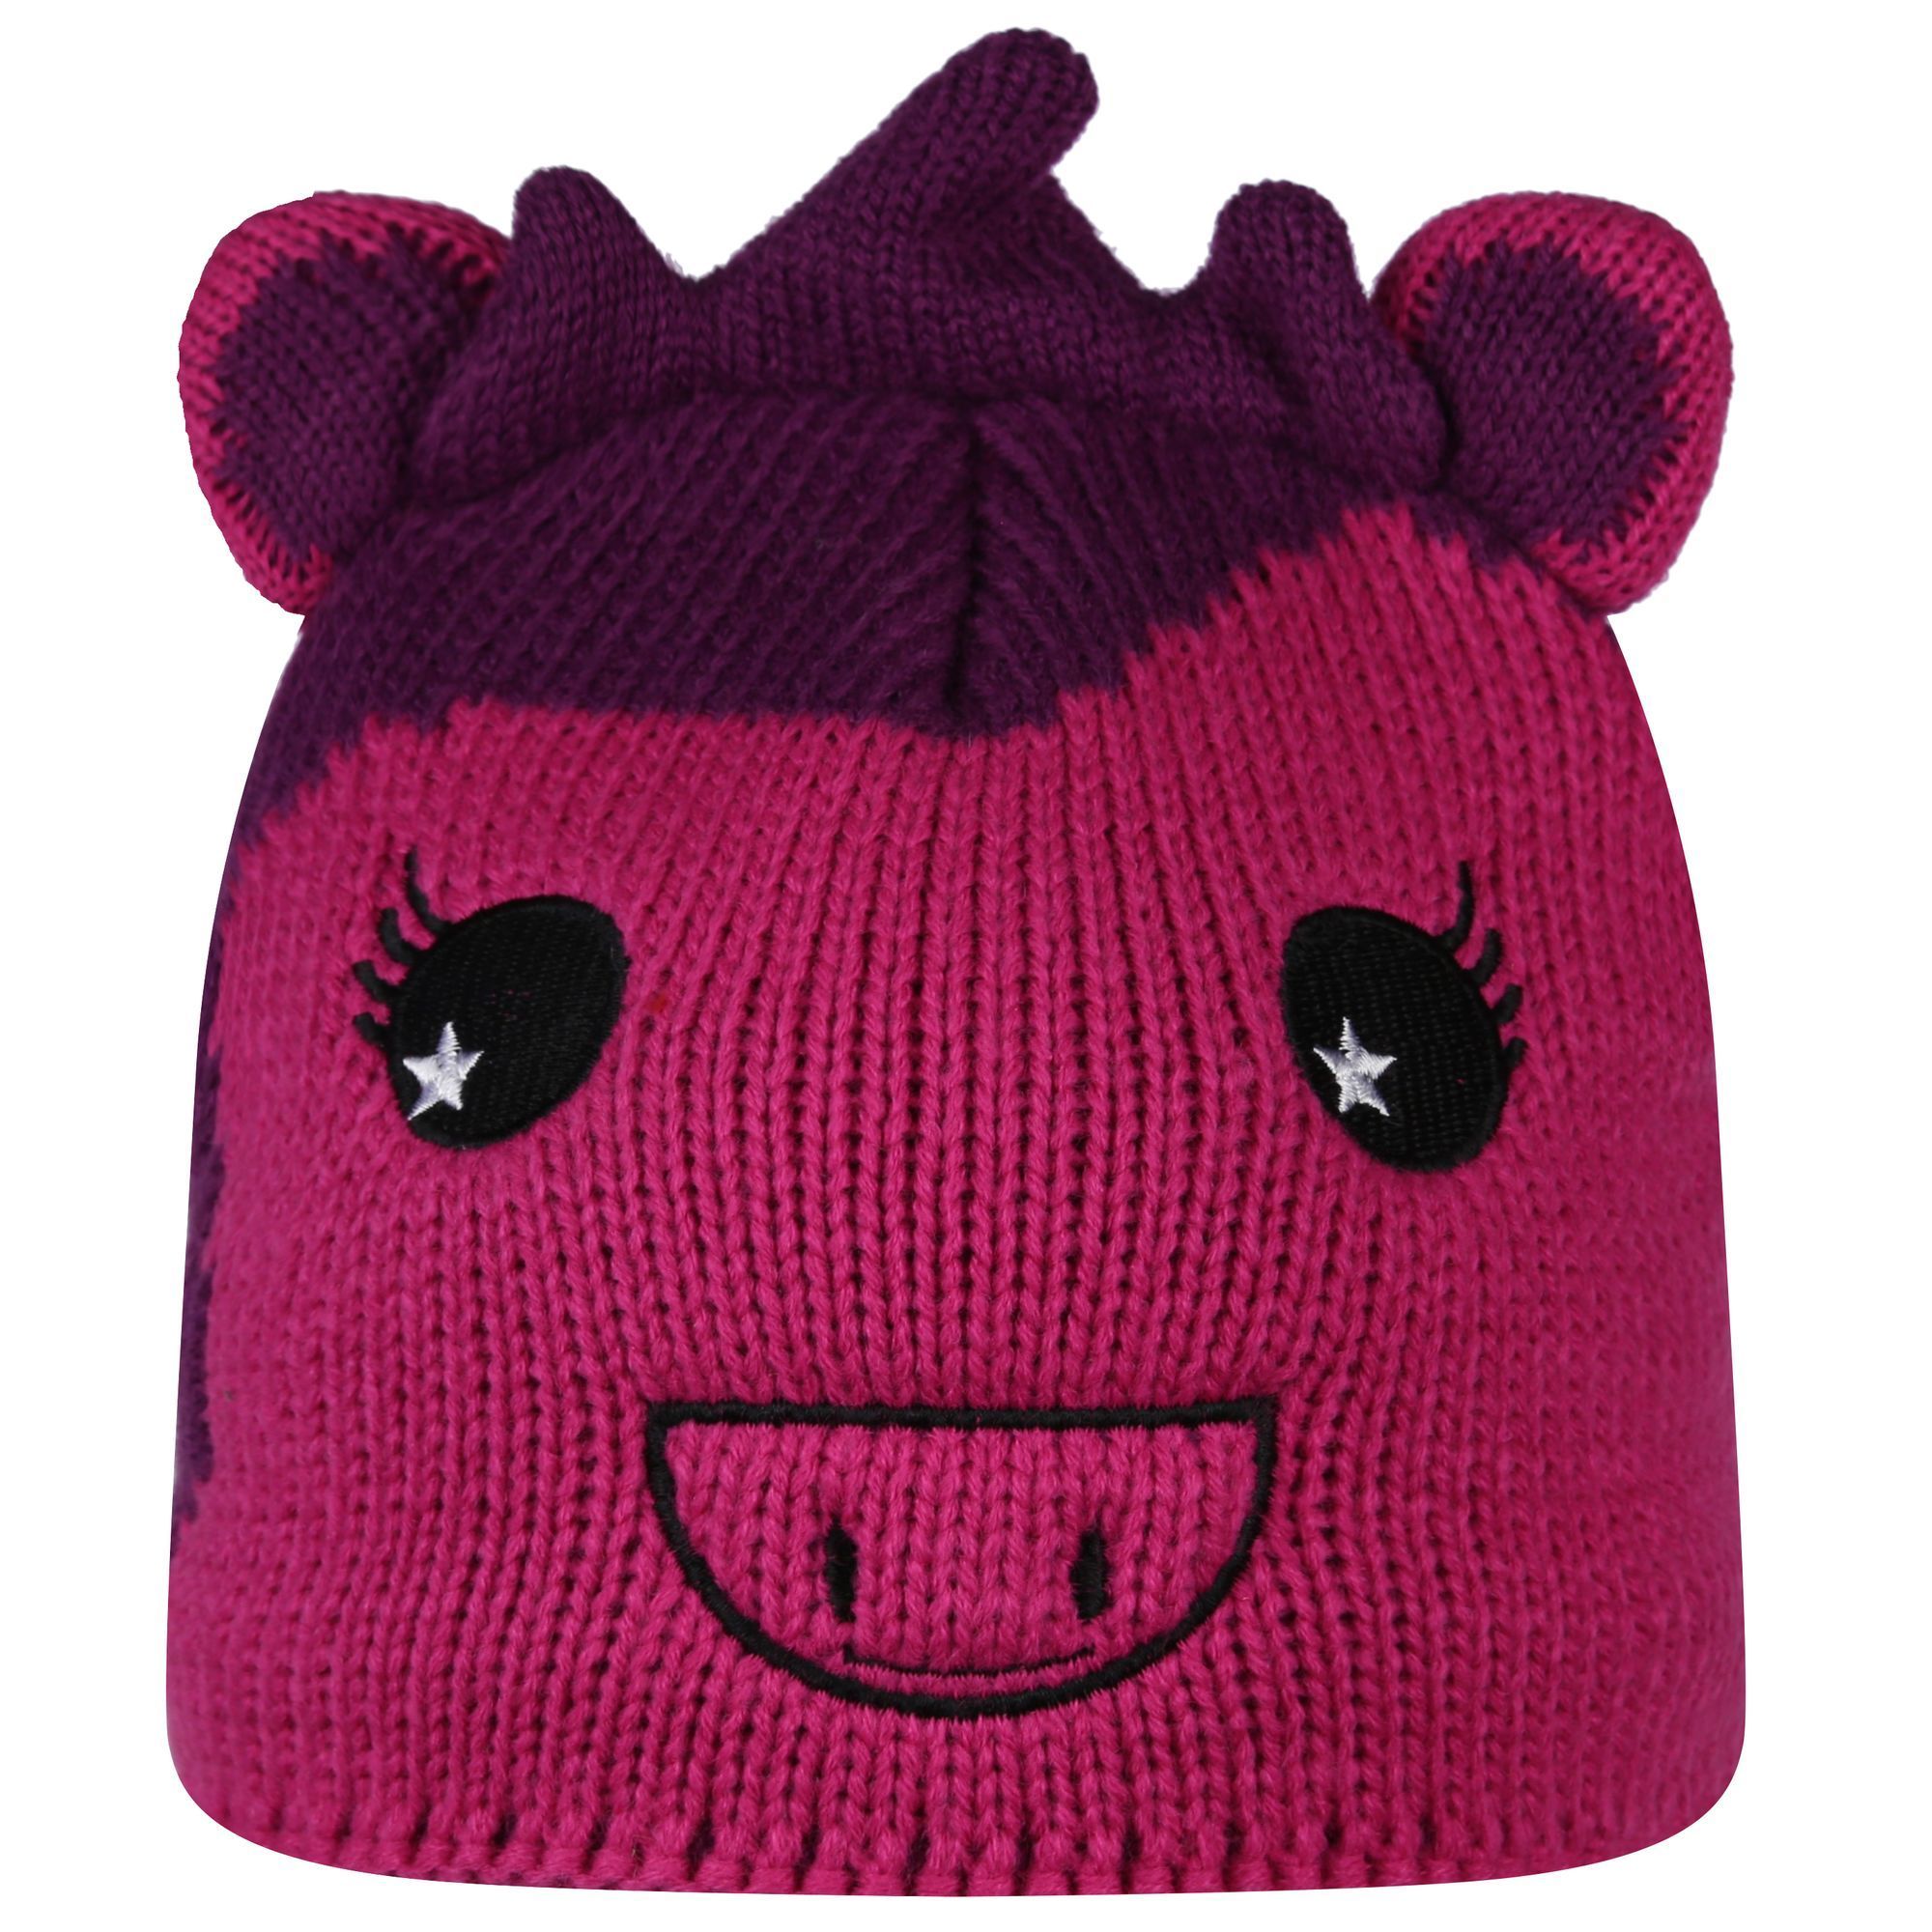 Kids animal design winter hat. Cosy fleece lining. Fabric: 100% Acrylic.